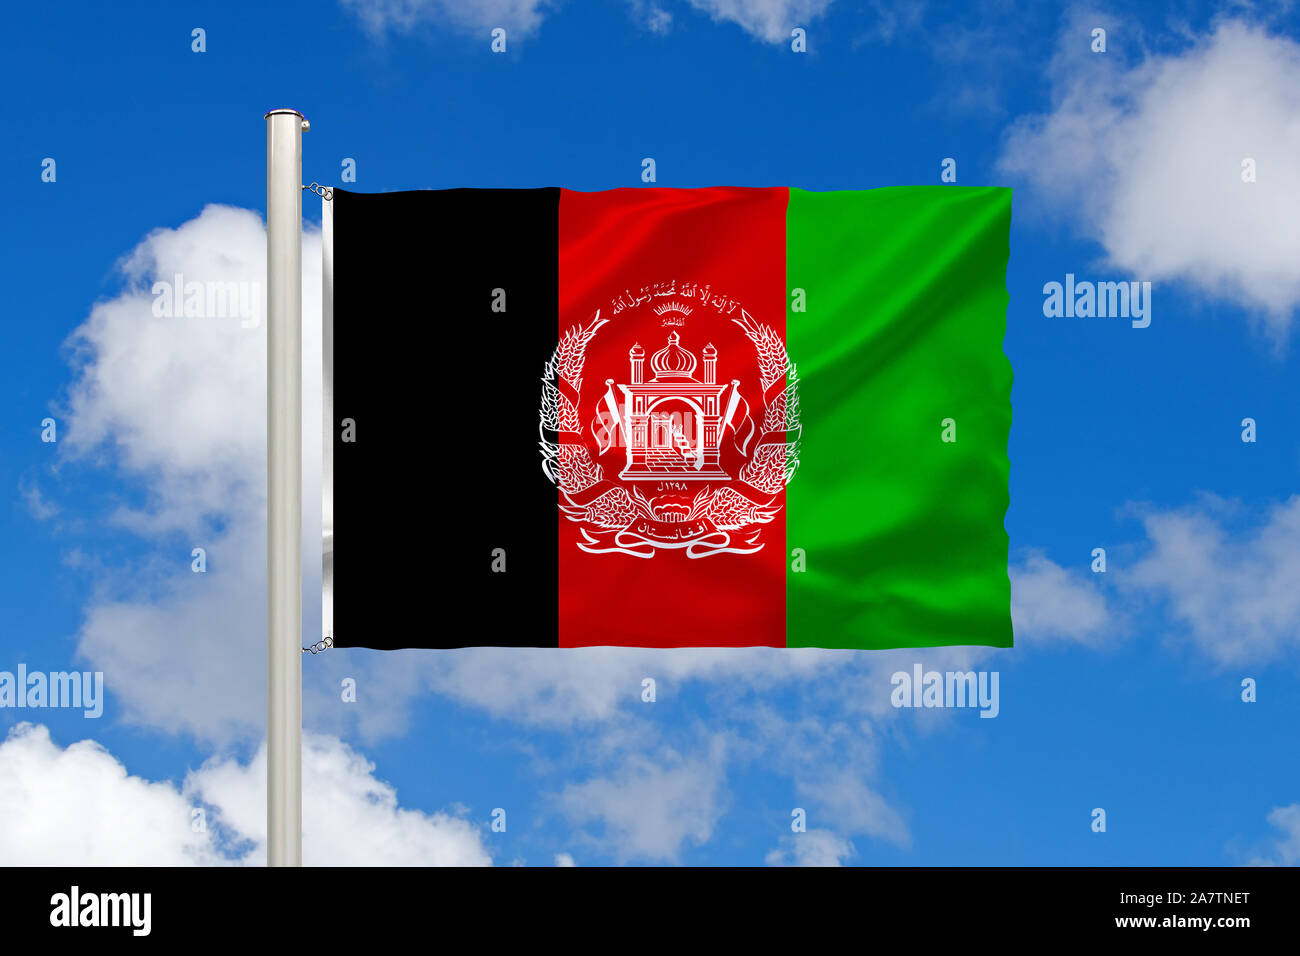 Afghanistan, Taliban, Binnenstaat, Südostasien, Flagge, Nationalflagge, Fahne, Nationalfahne, Cumulus Wolken vor blauen Himmel, Stock Photo